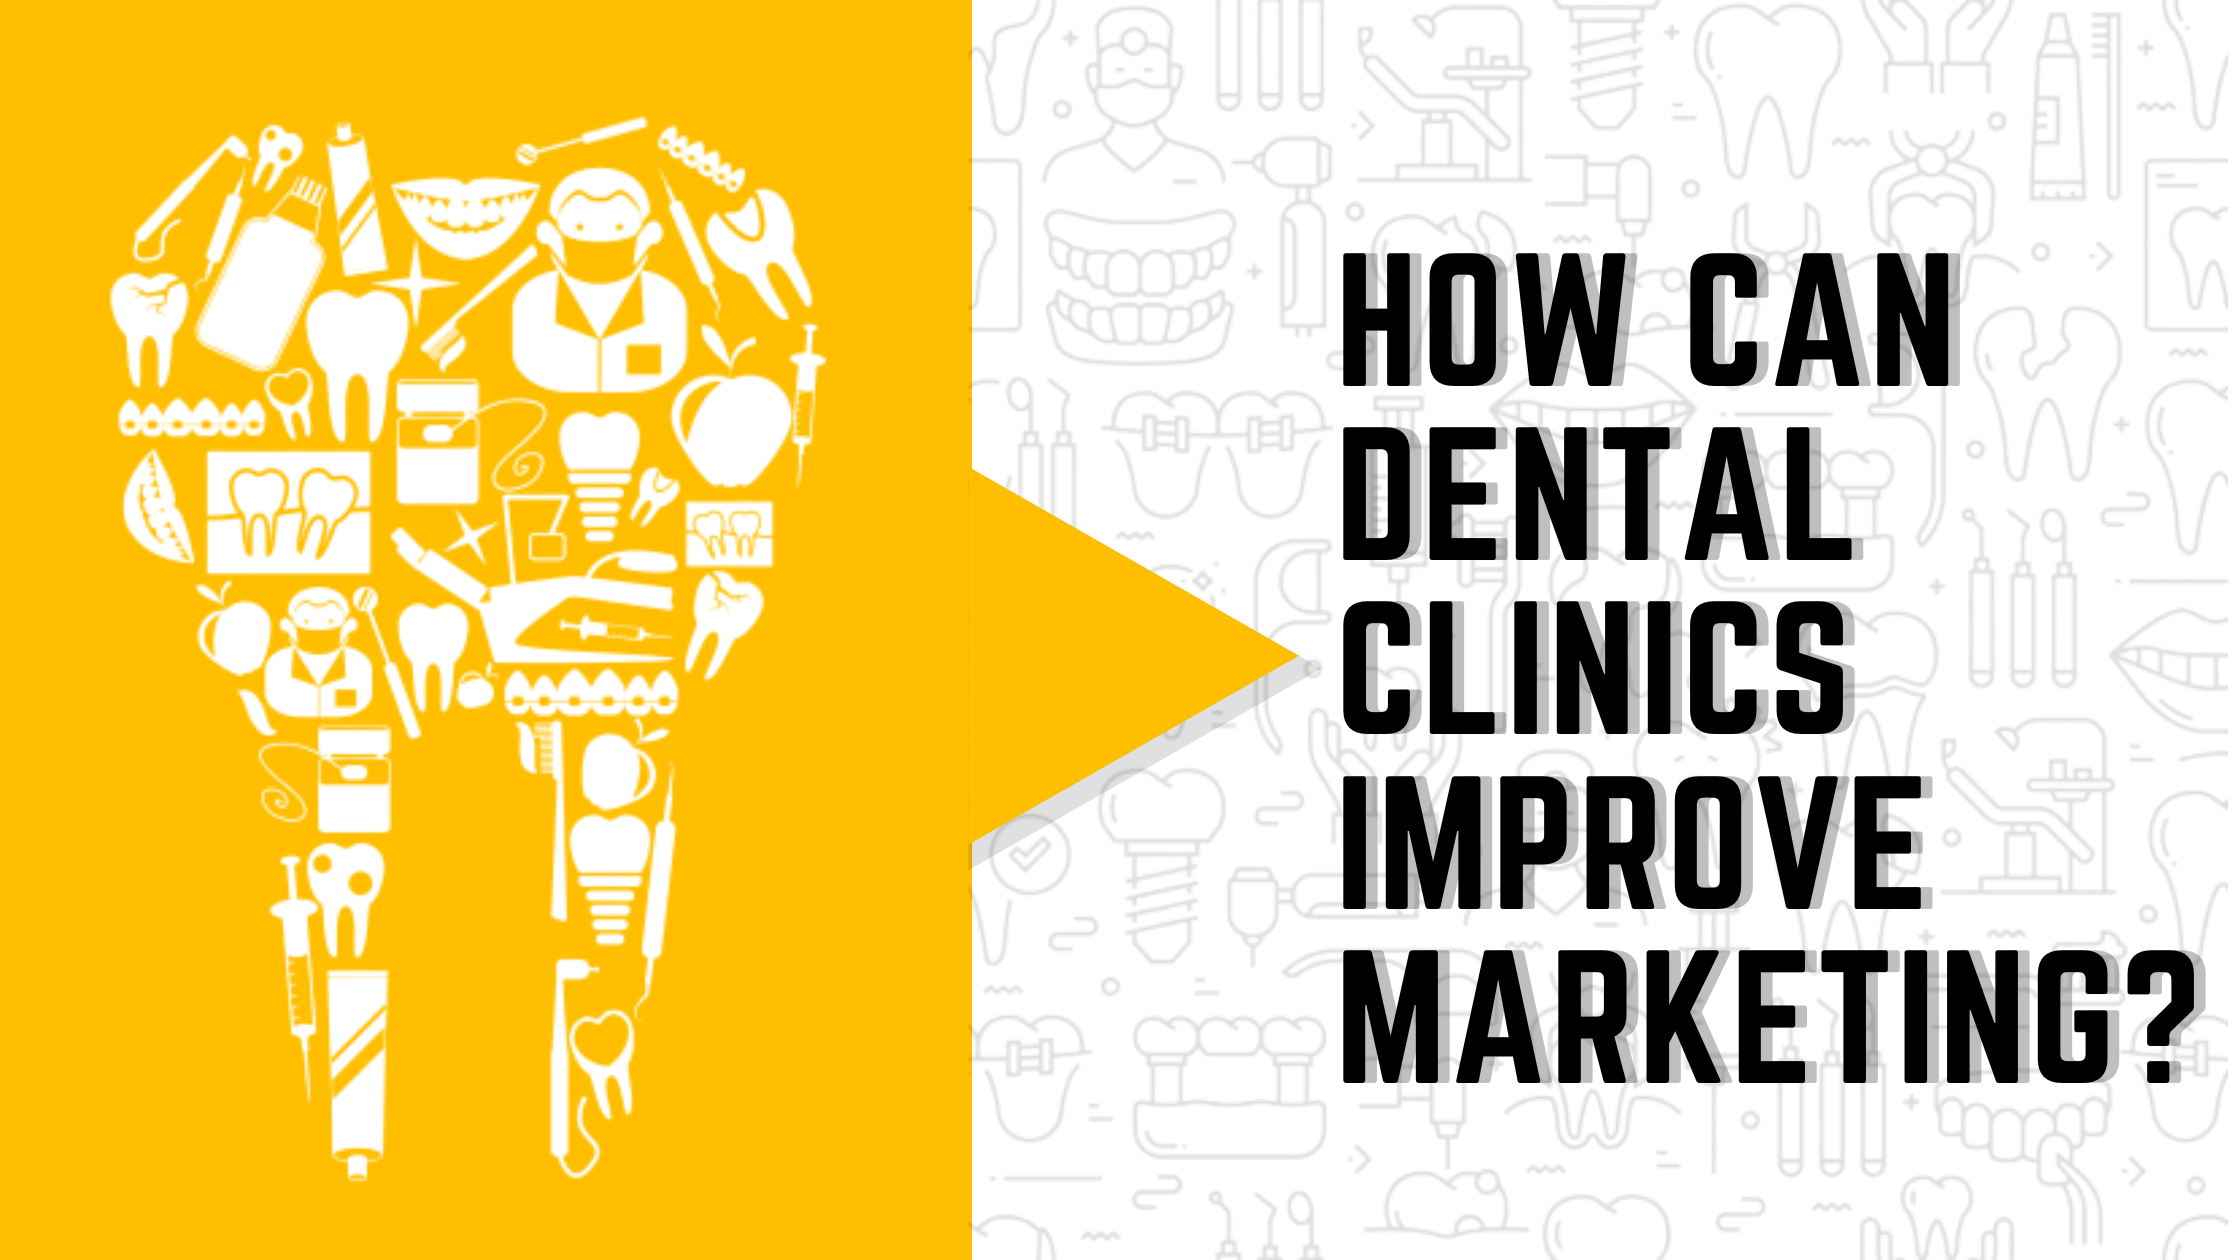 Dental Clinics for Marketing